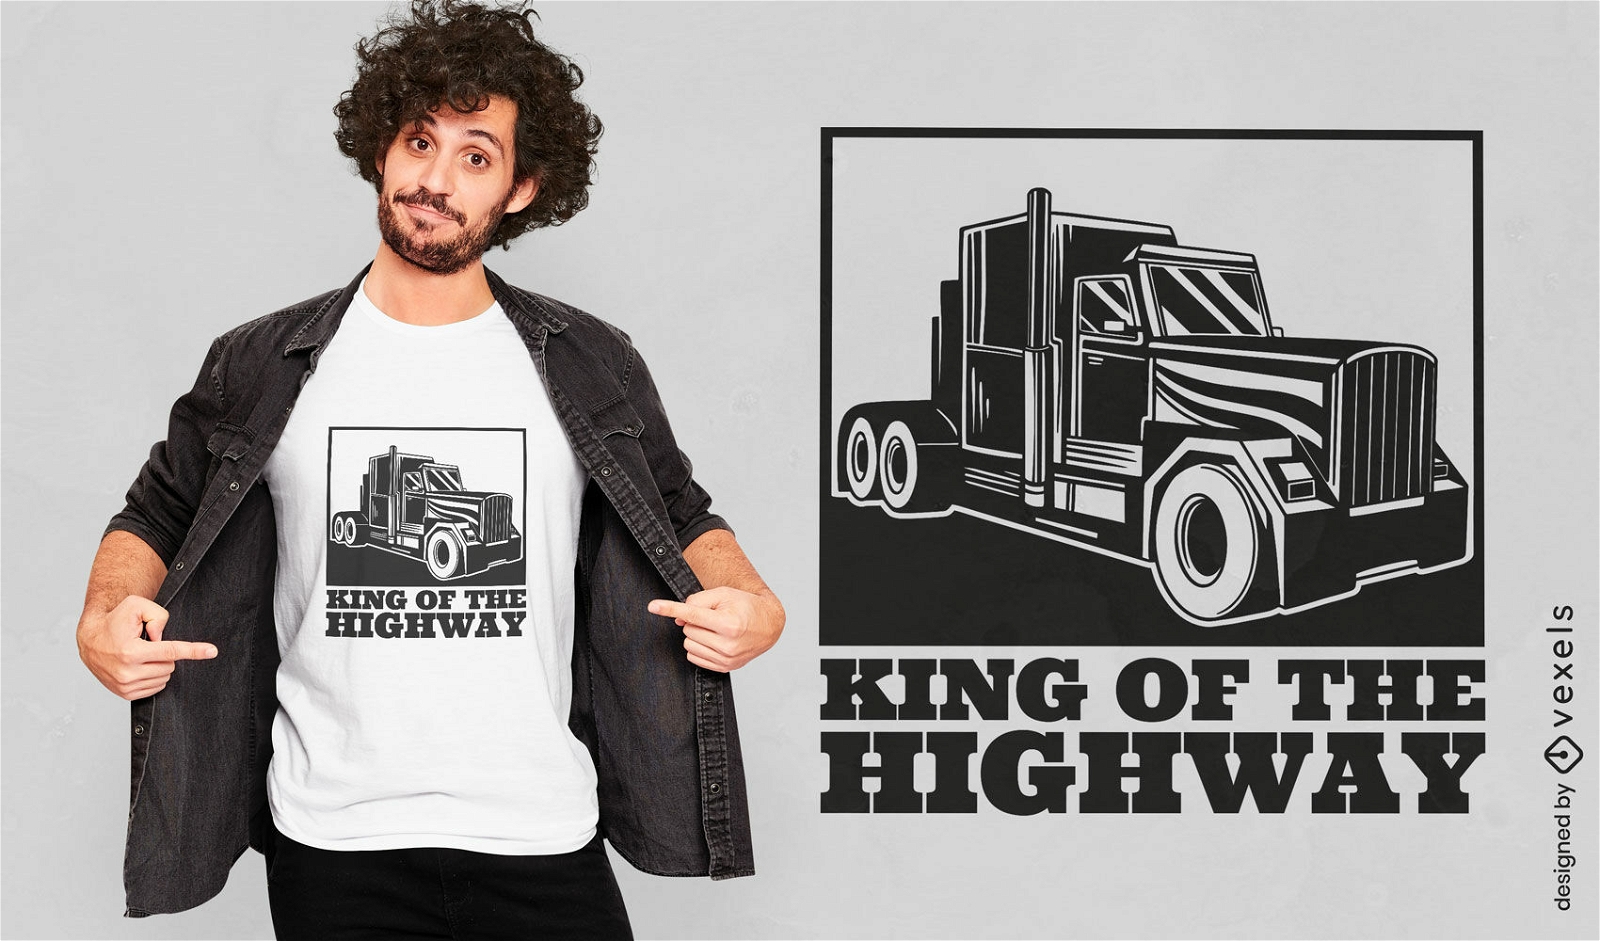 King of the highway trucker t-shirt design